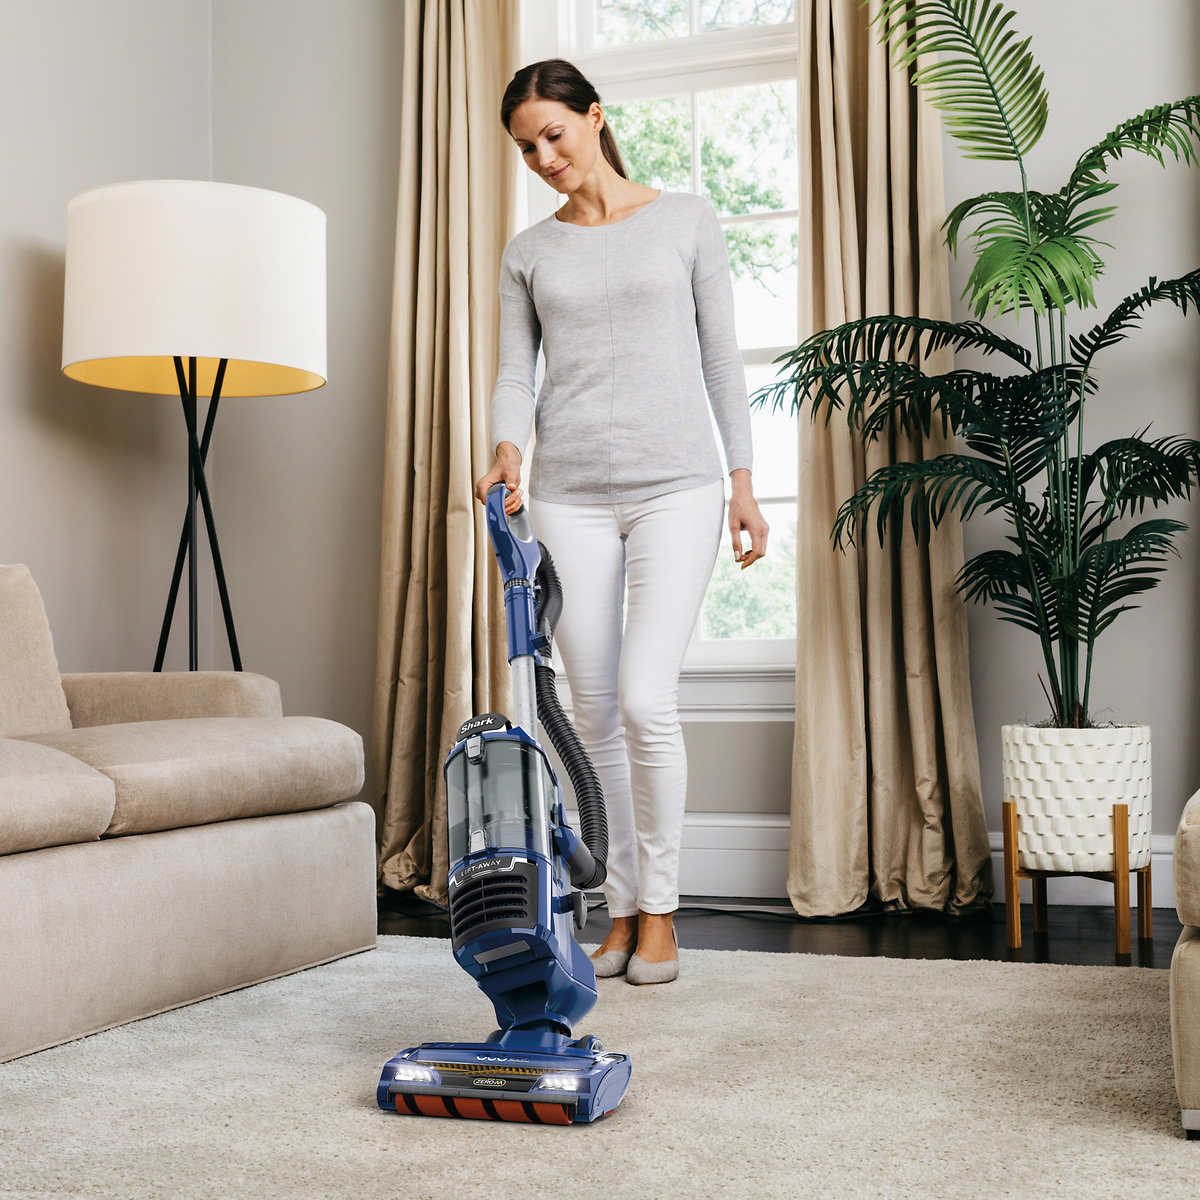 Vacuum cleaner from costco